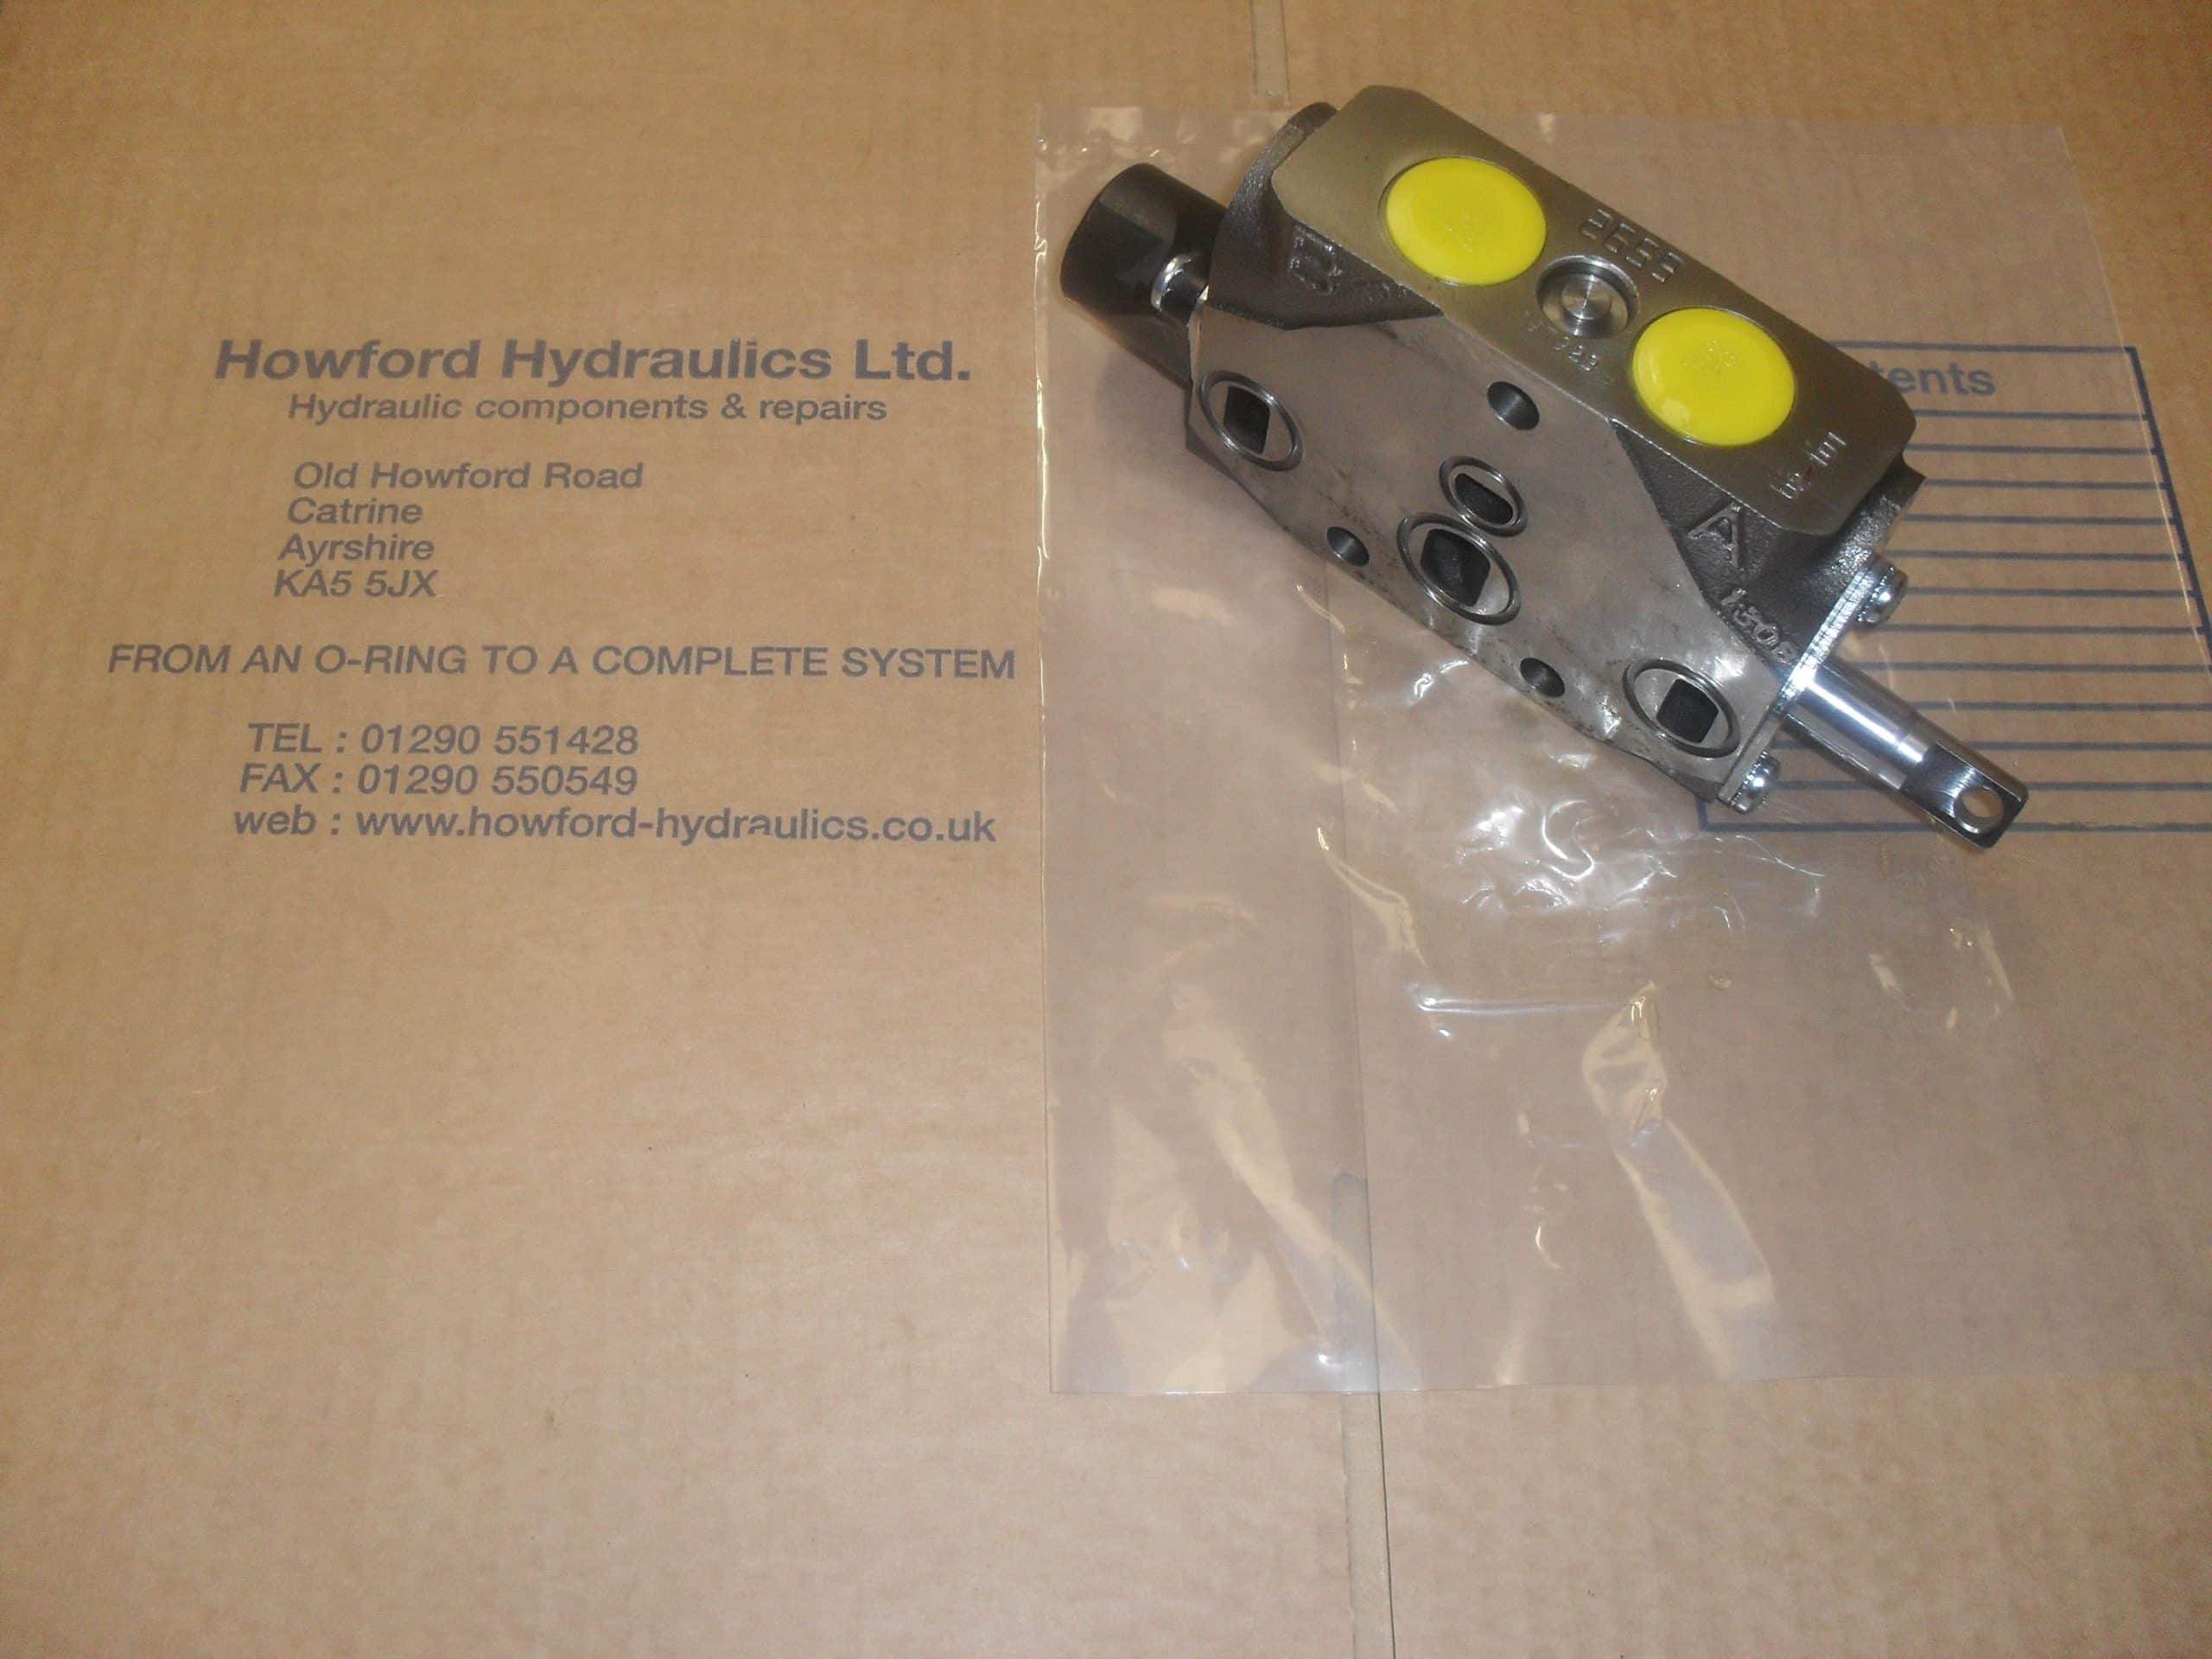 www.howford-hydraulics.co.uk